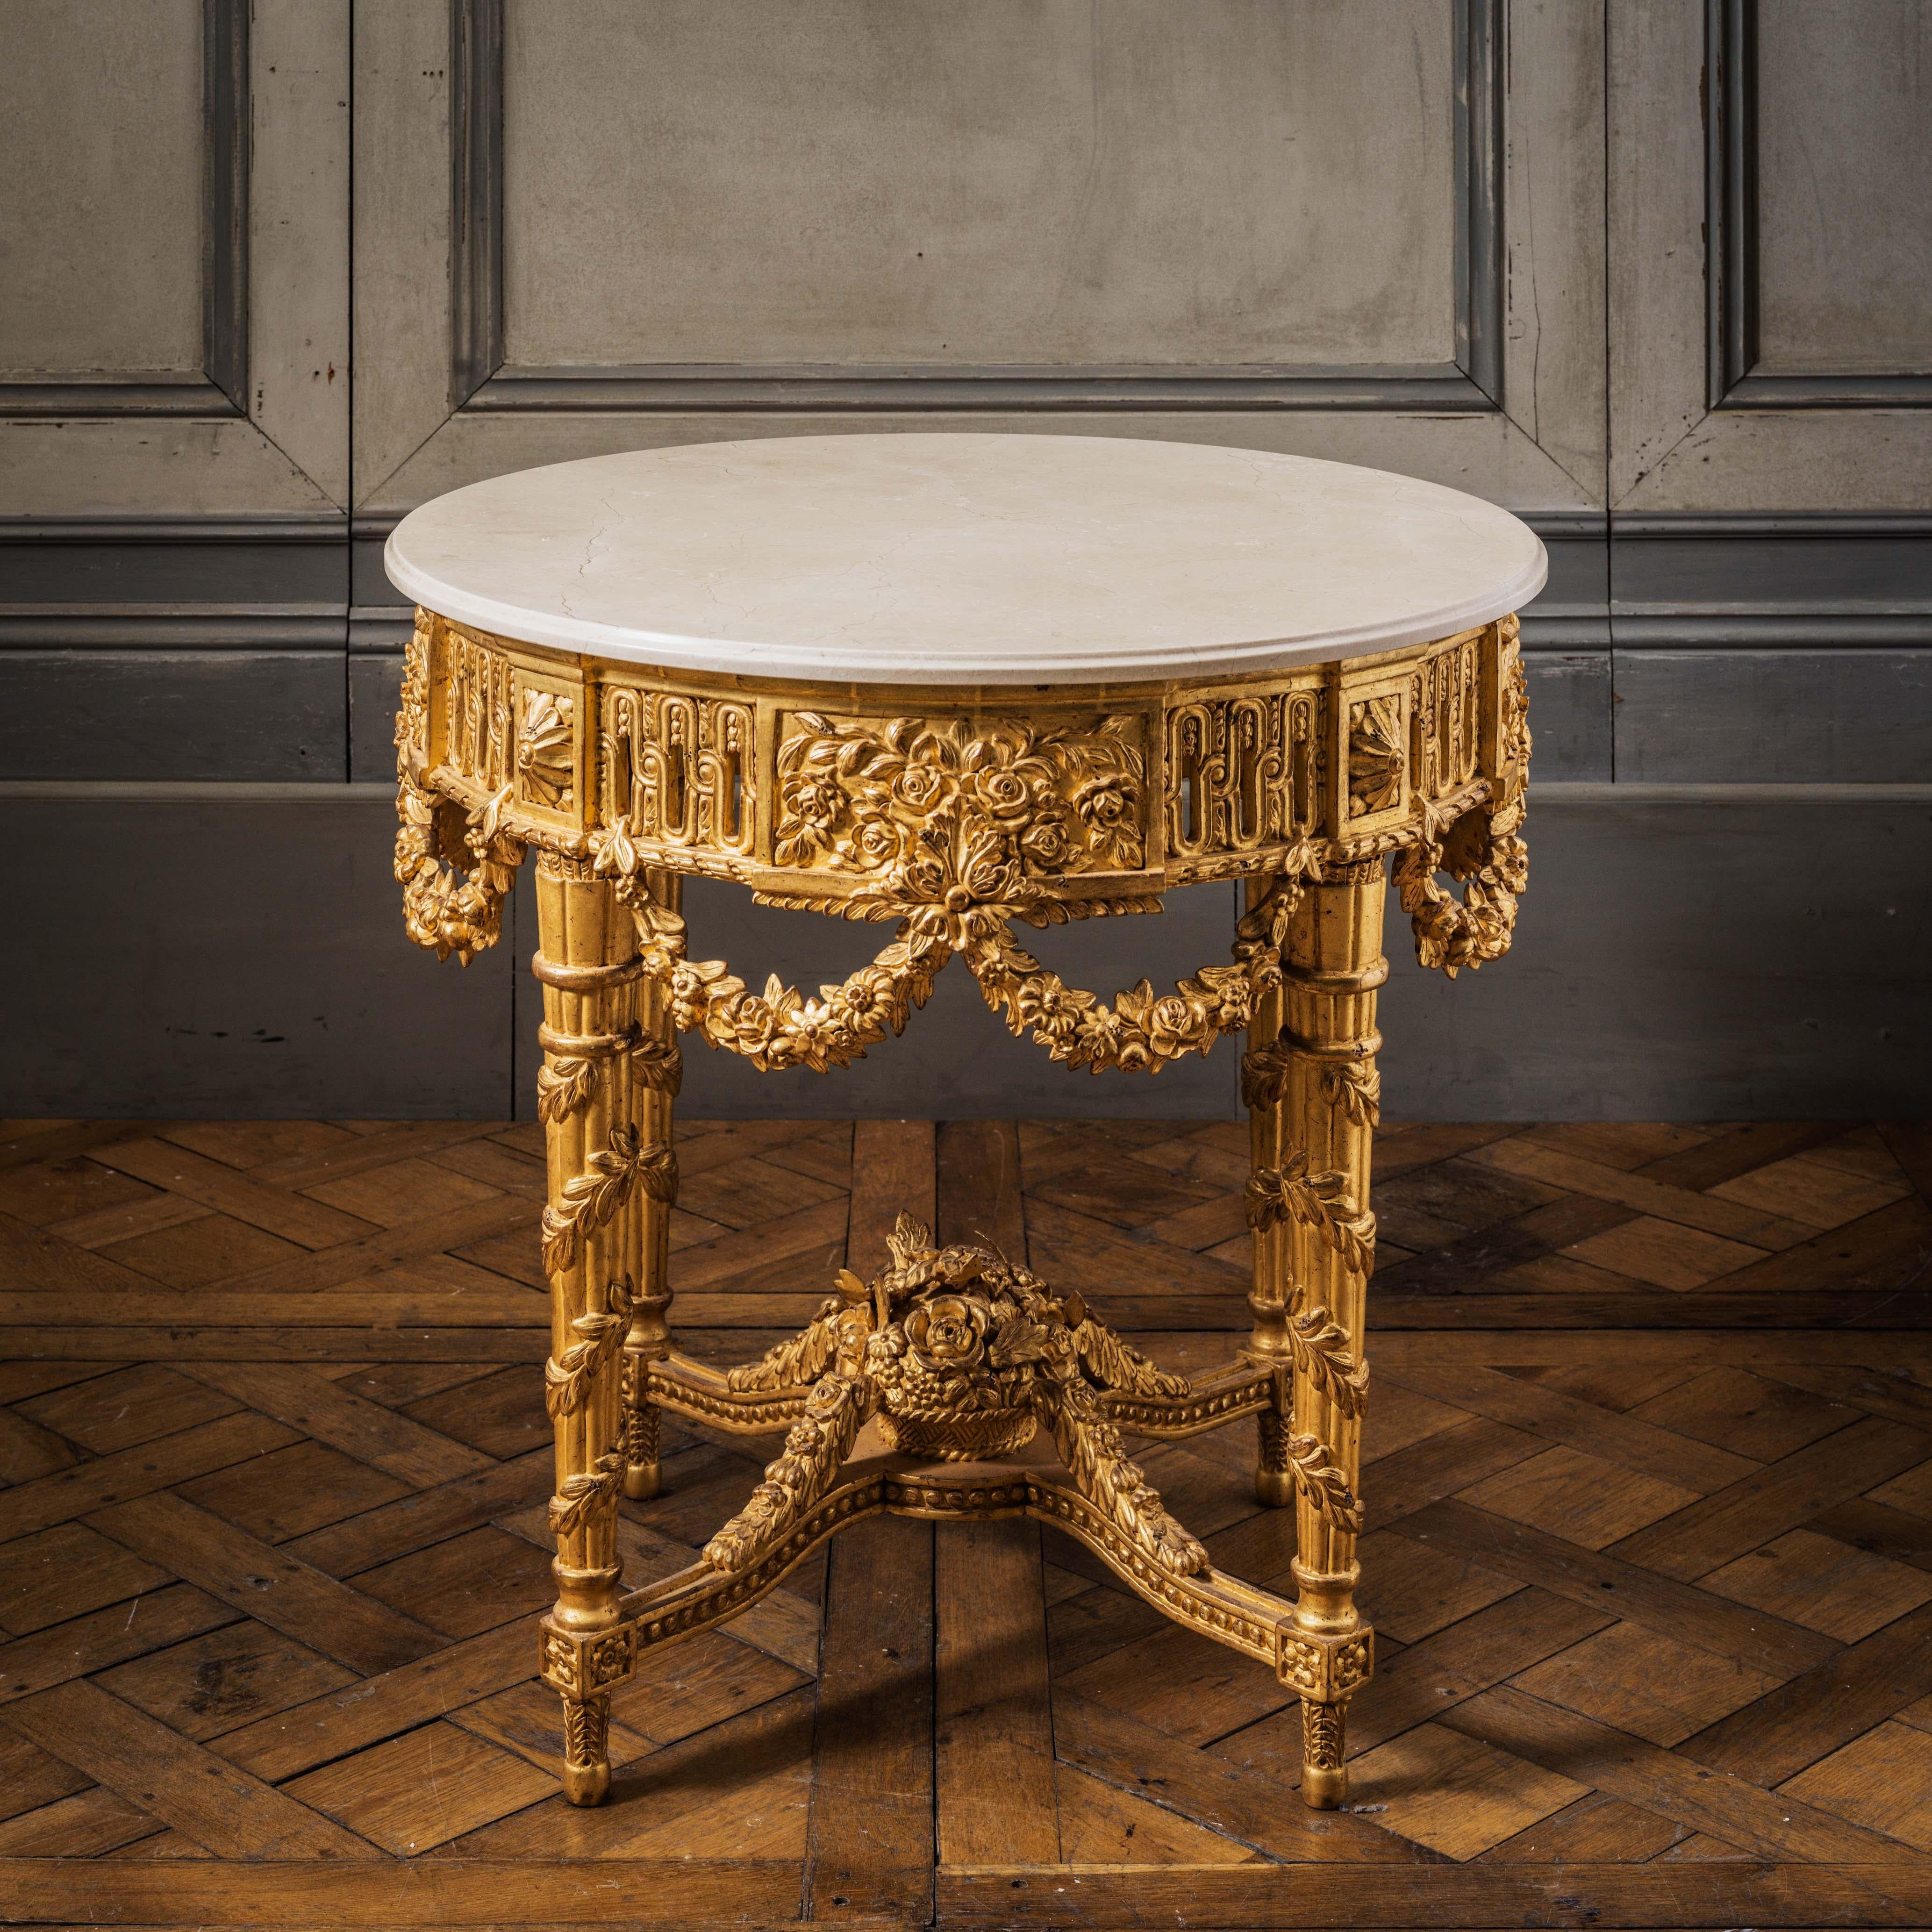 Contemporary Louis XVI Style Giltwood Console Tables by La Maison, London For Sale